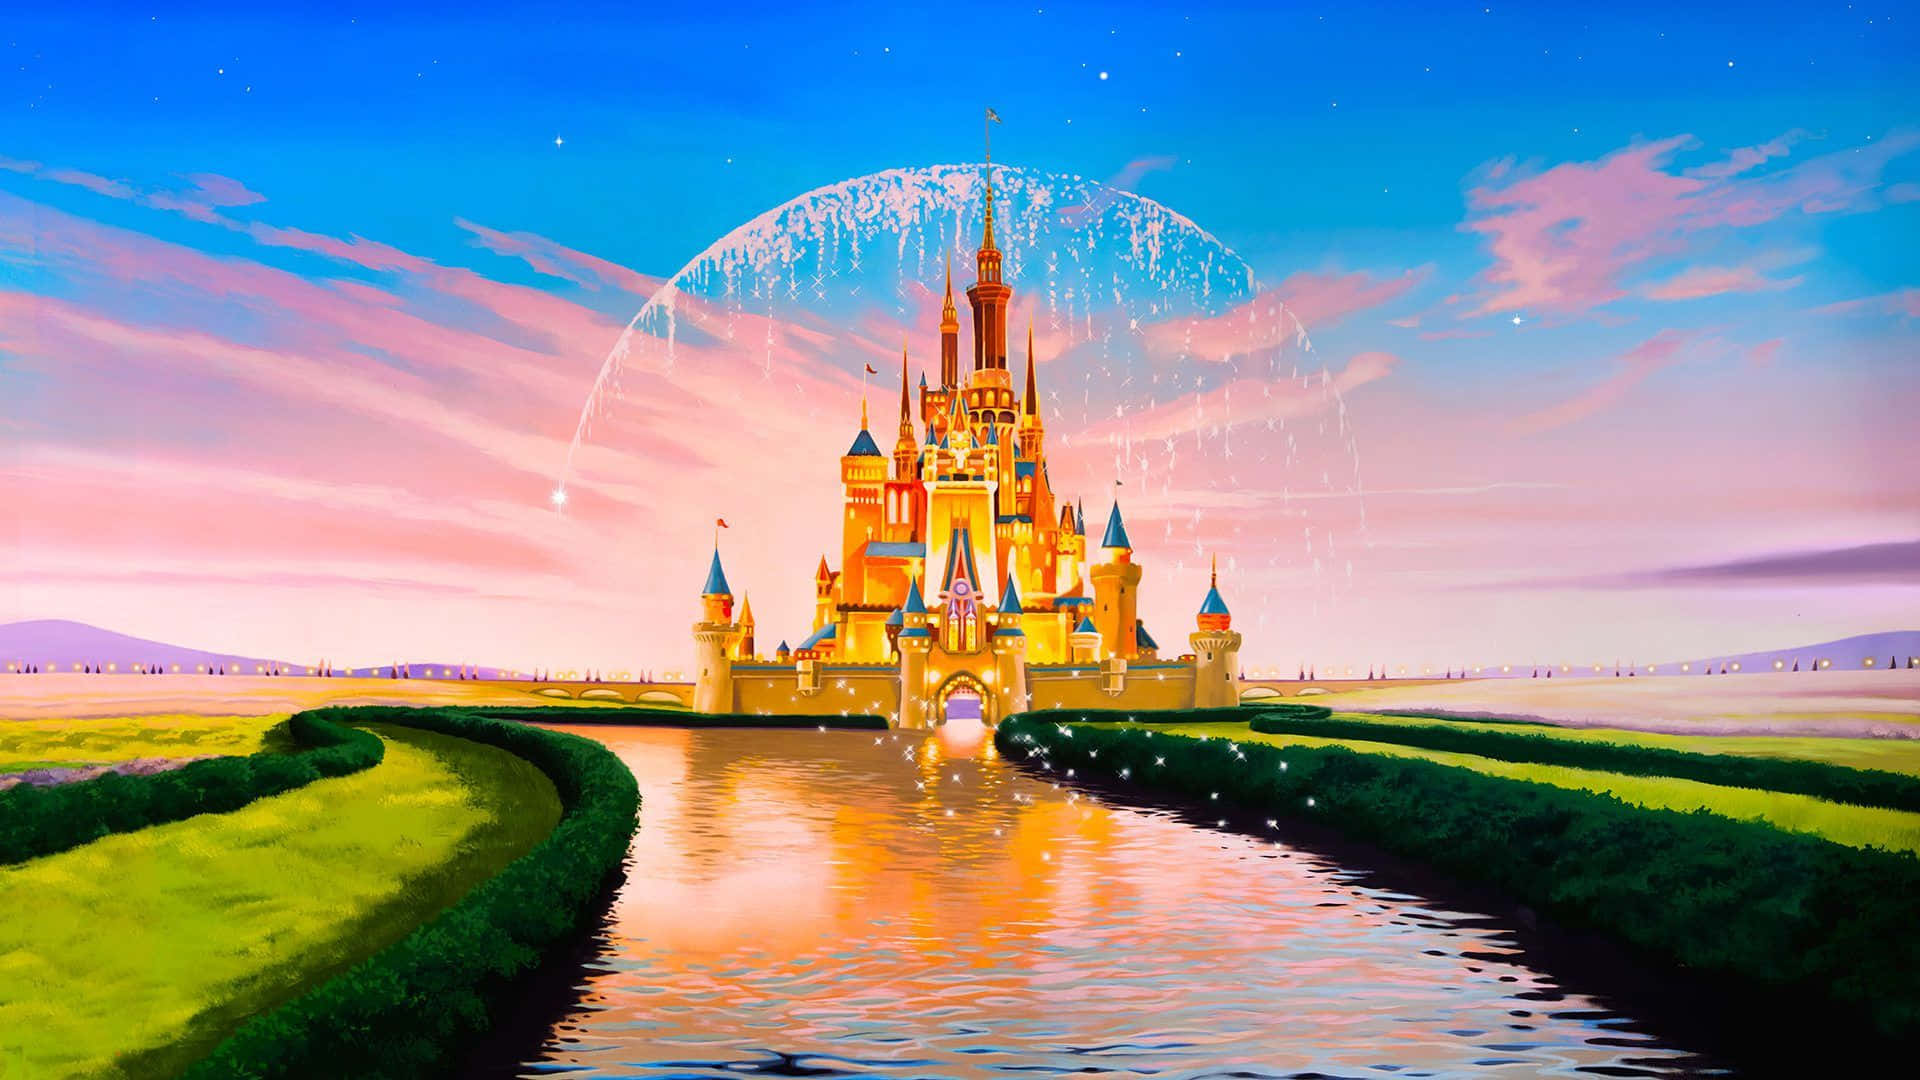 1920x1080 Disney Castle Background